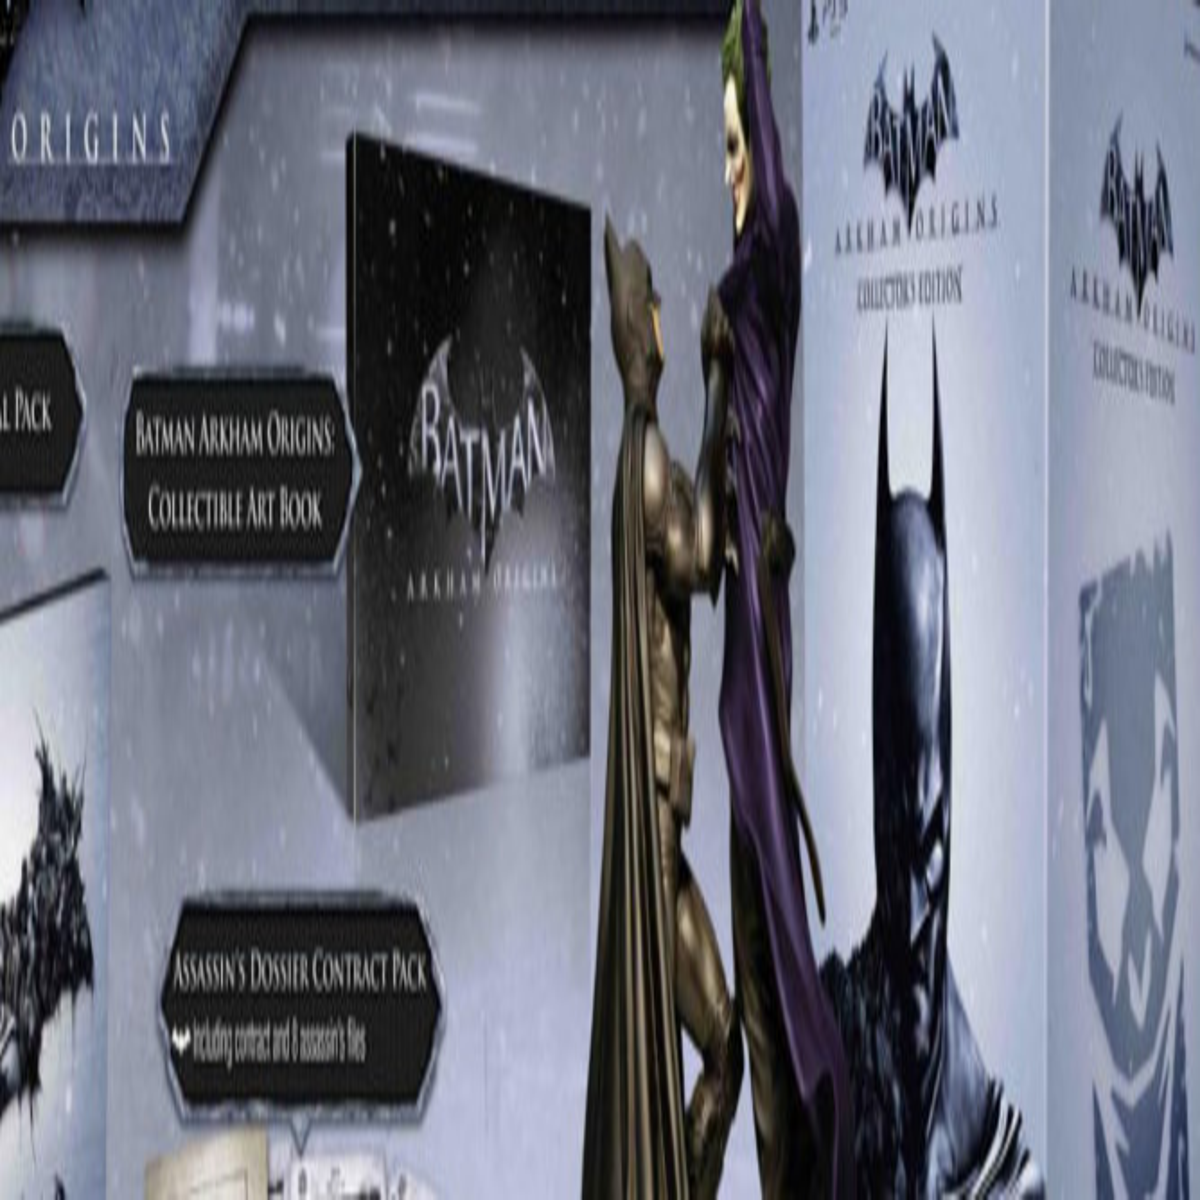 Batman: Arkham Origins collector's edition revealed, contents inside | VG247